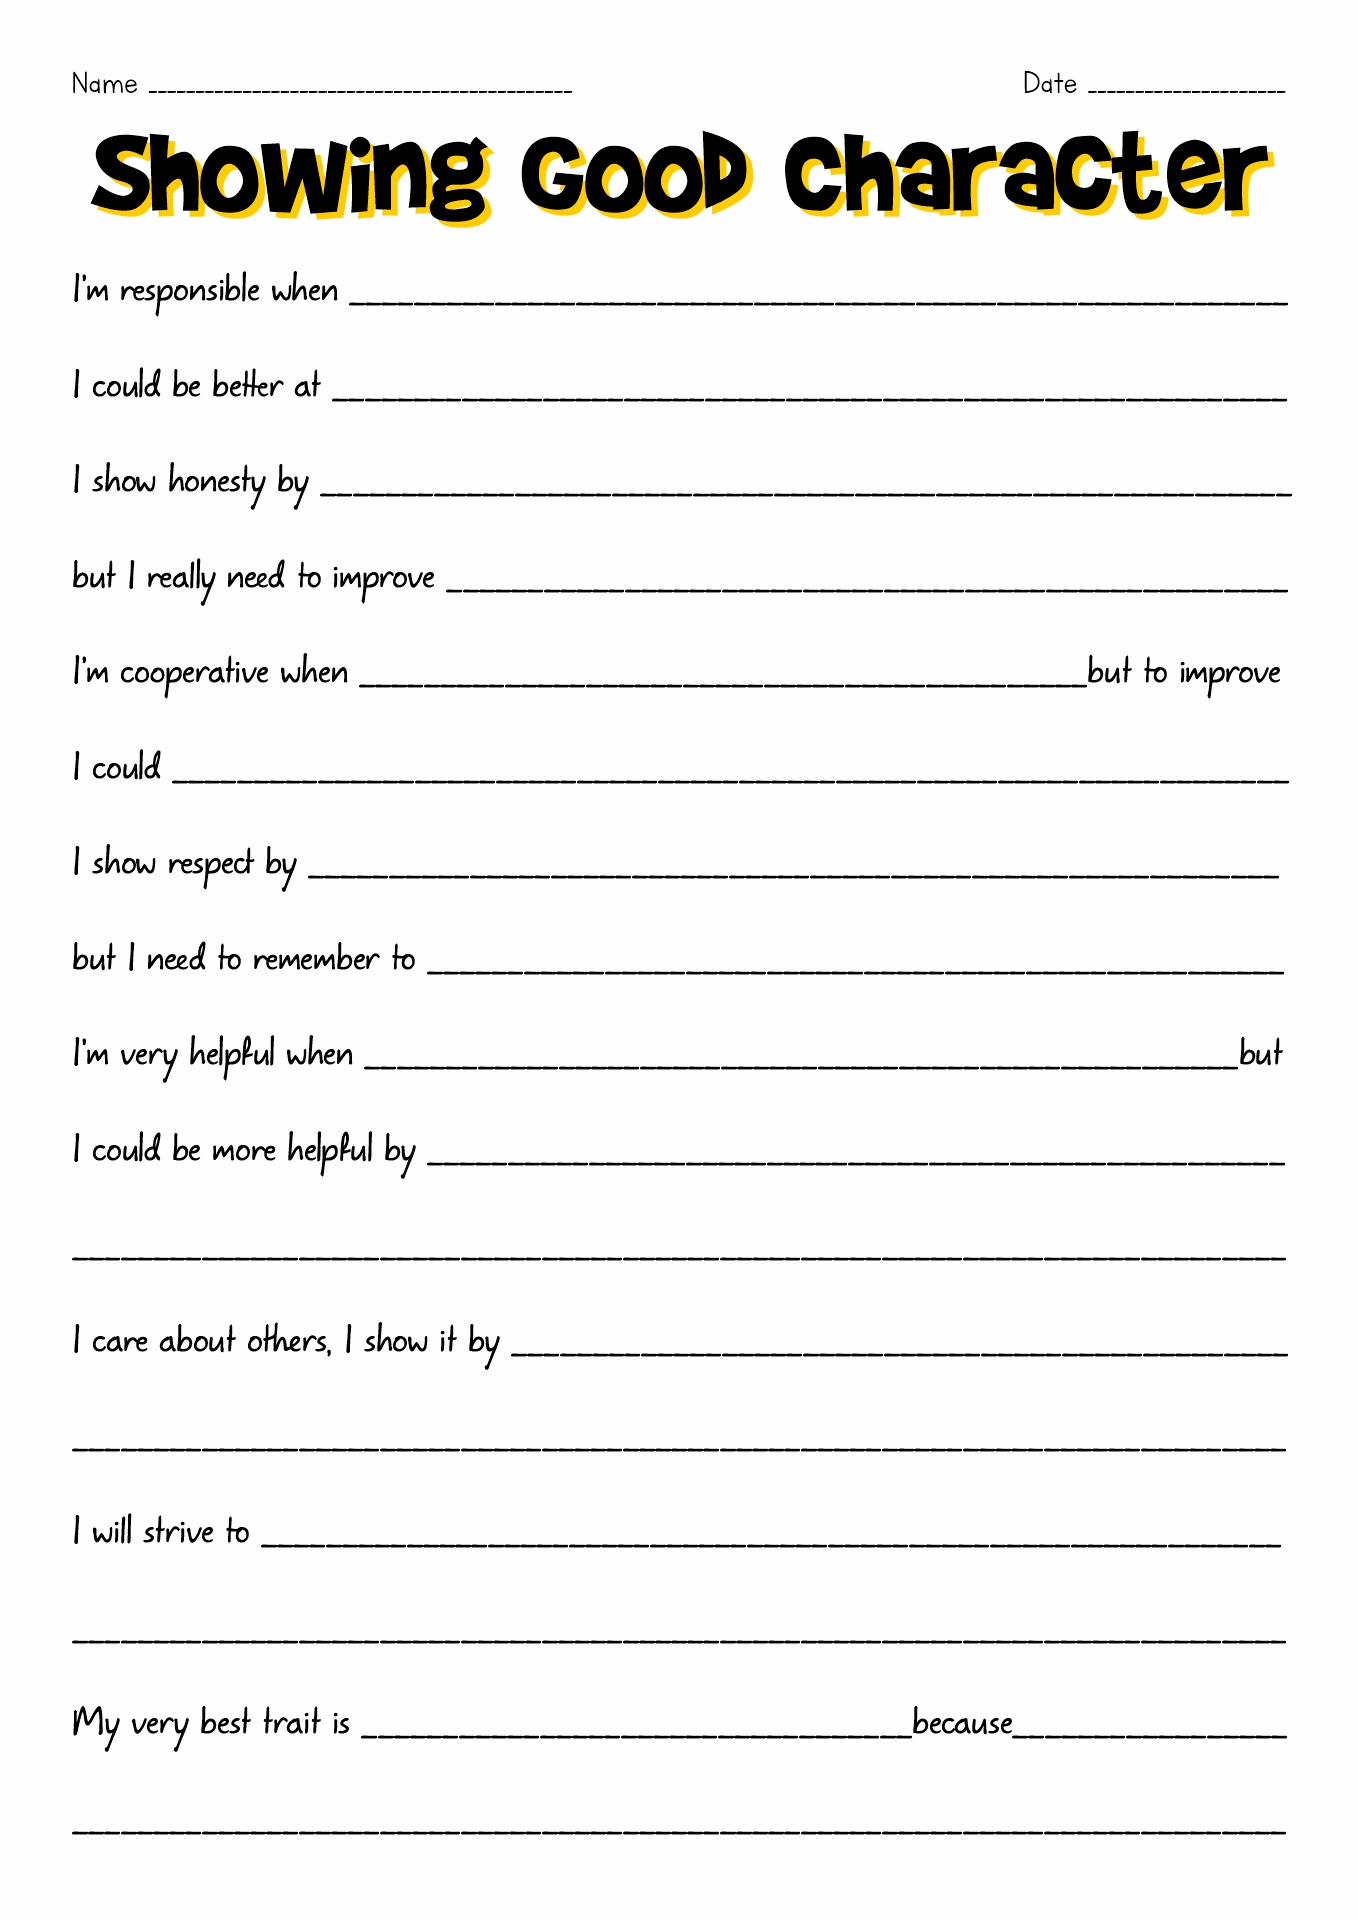 My Qualities Social Skills Worksheets Image